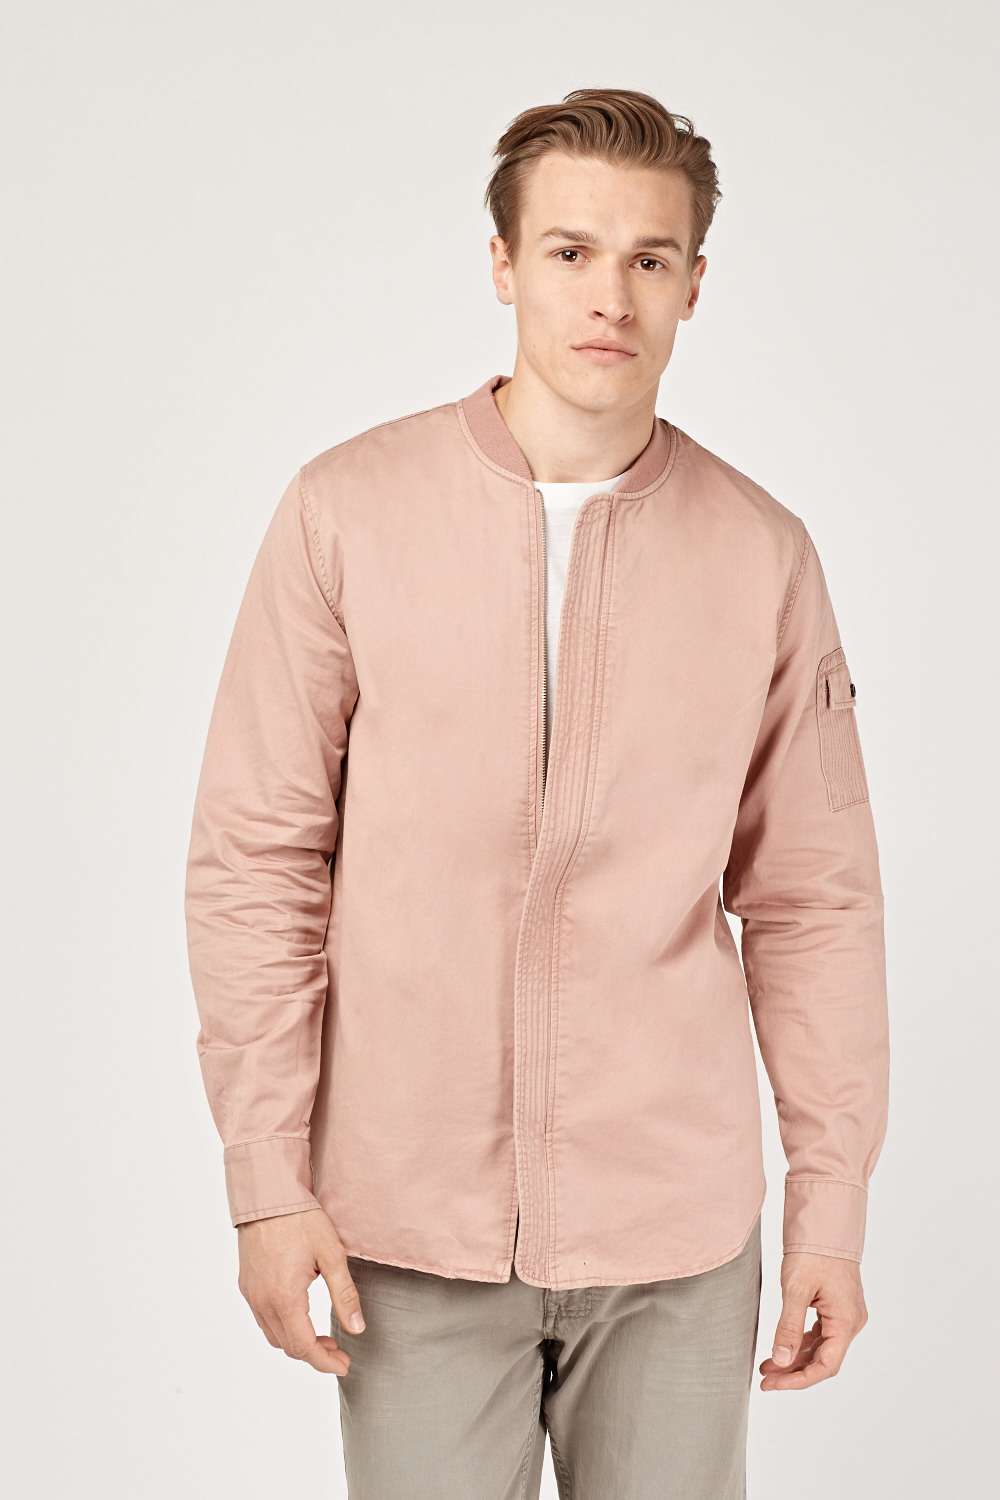 Dusty Pink Denim Jacket - Just $7